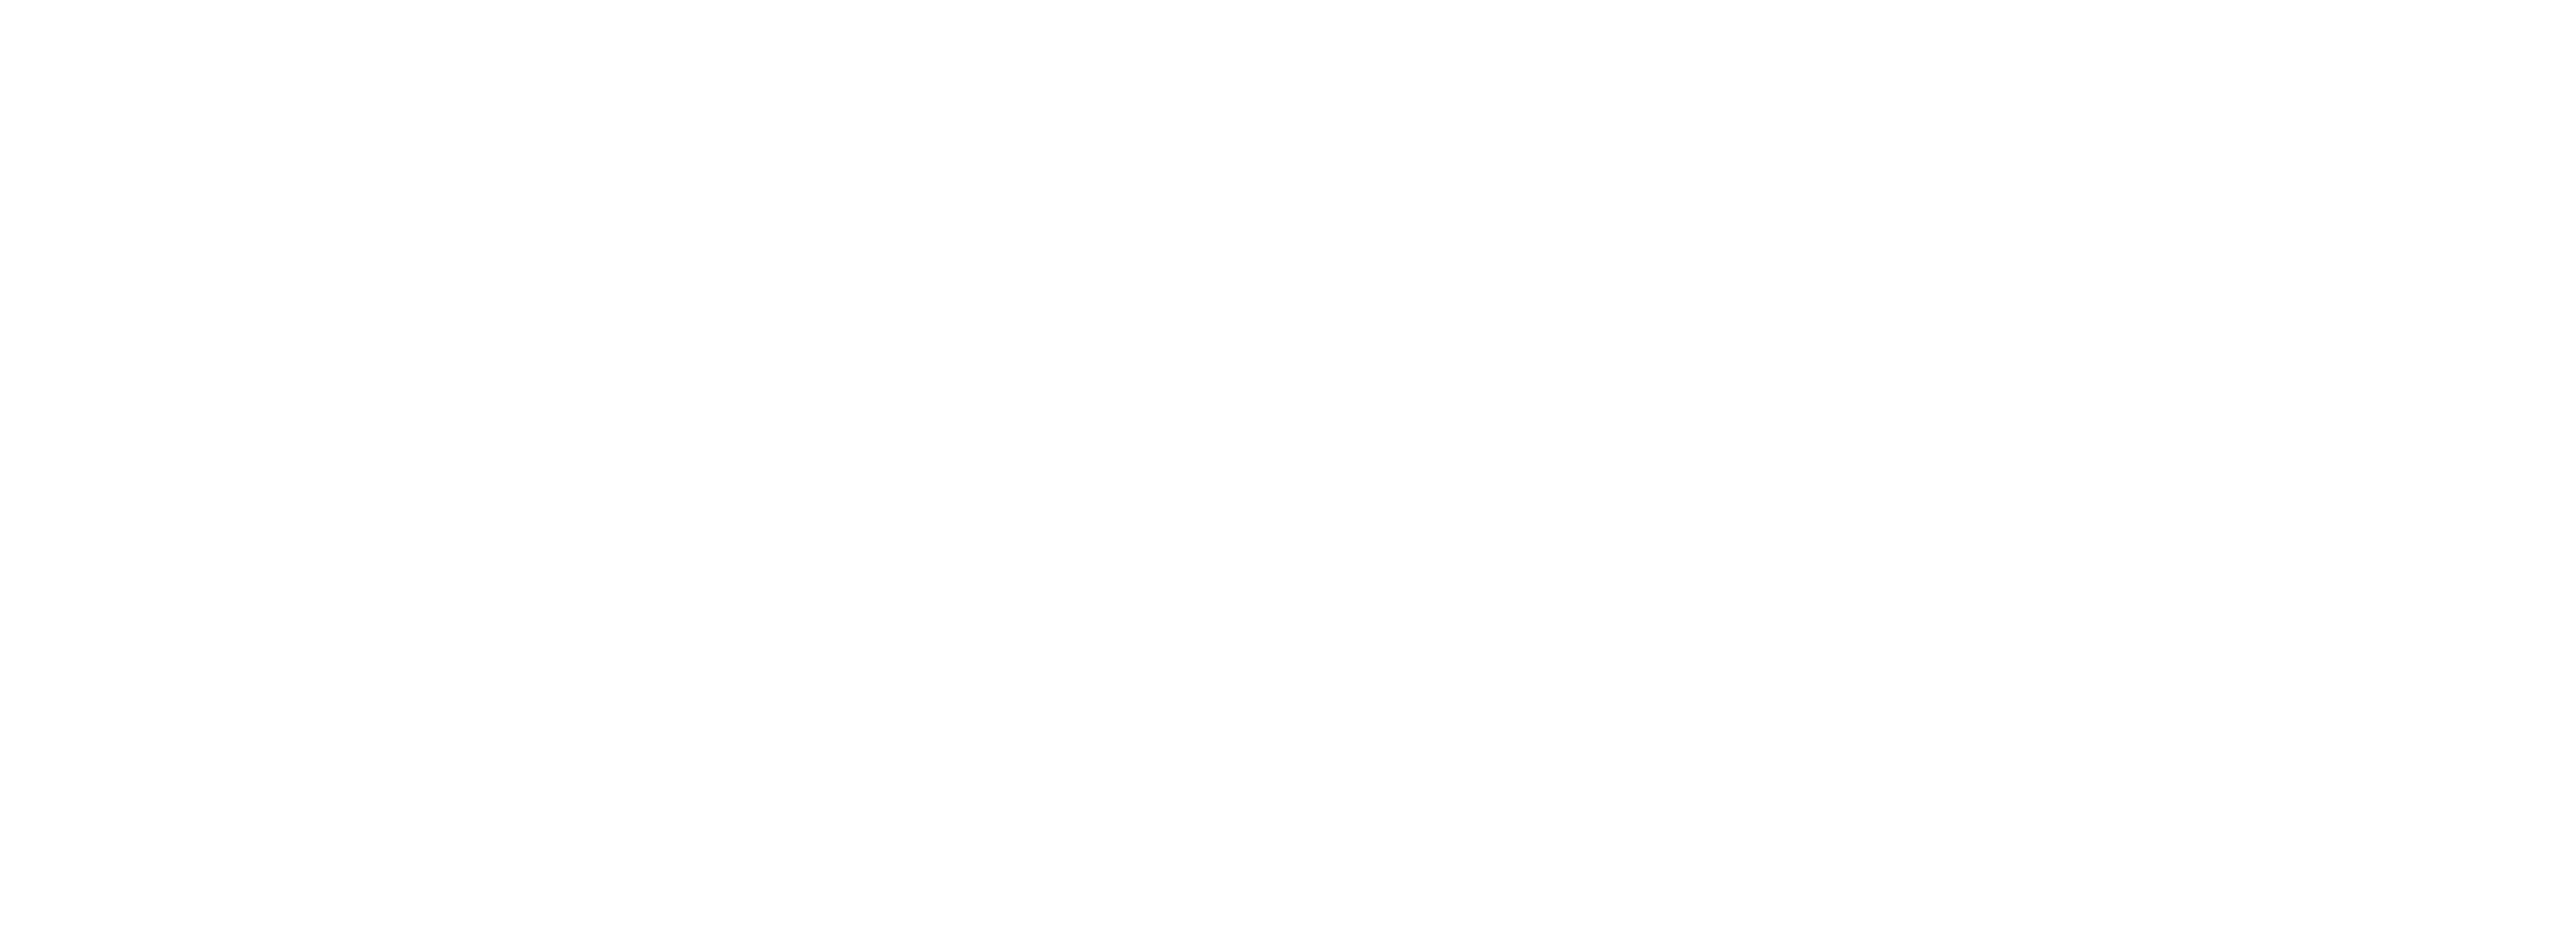 Metronet Honduras